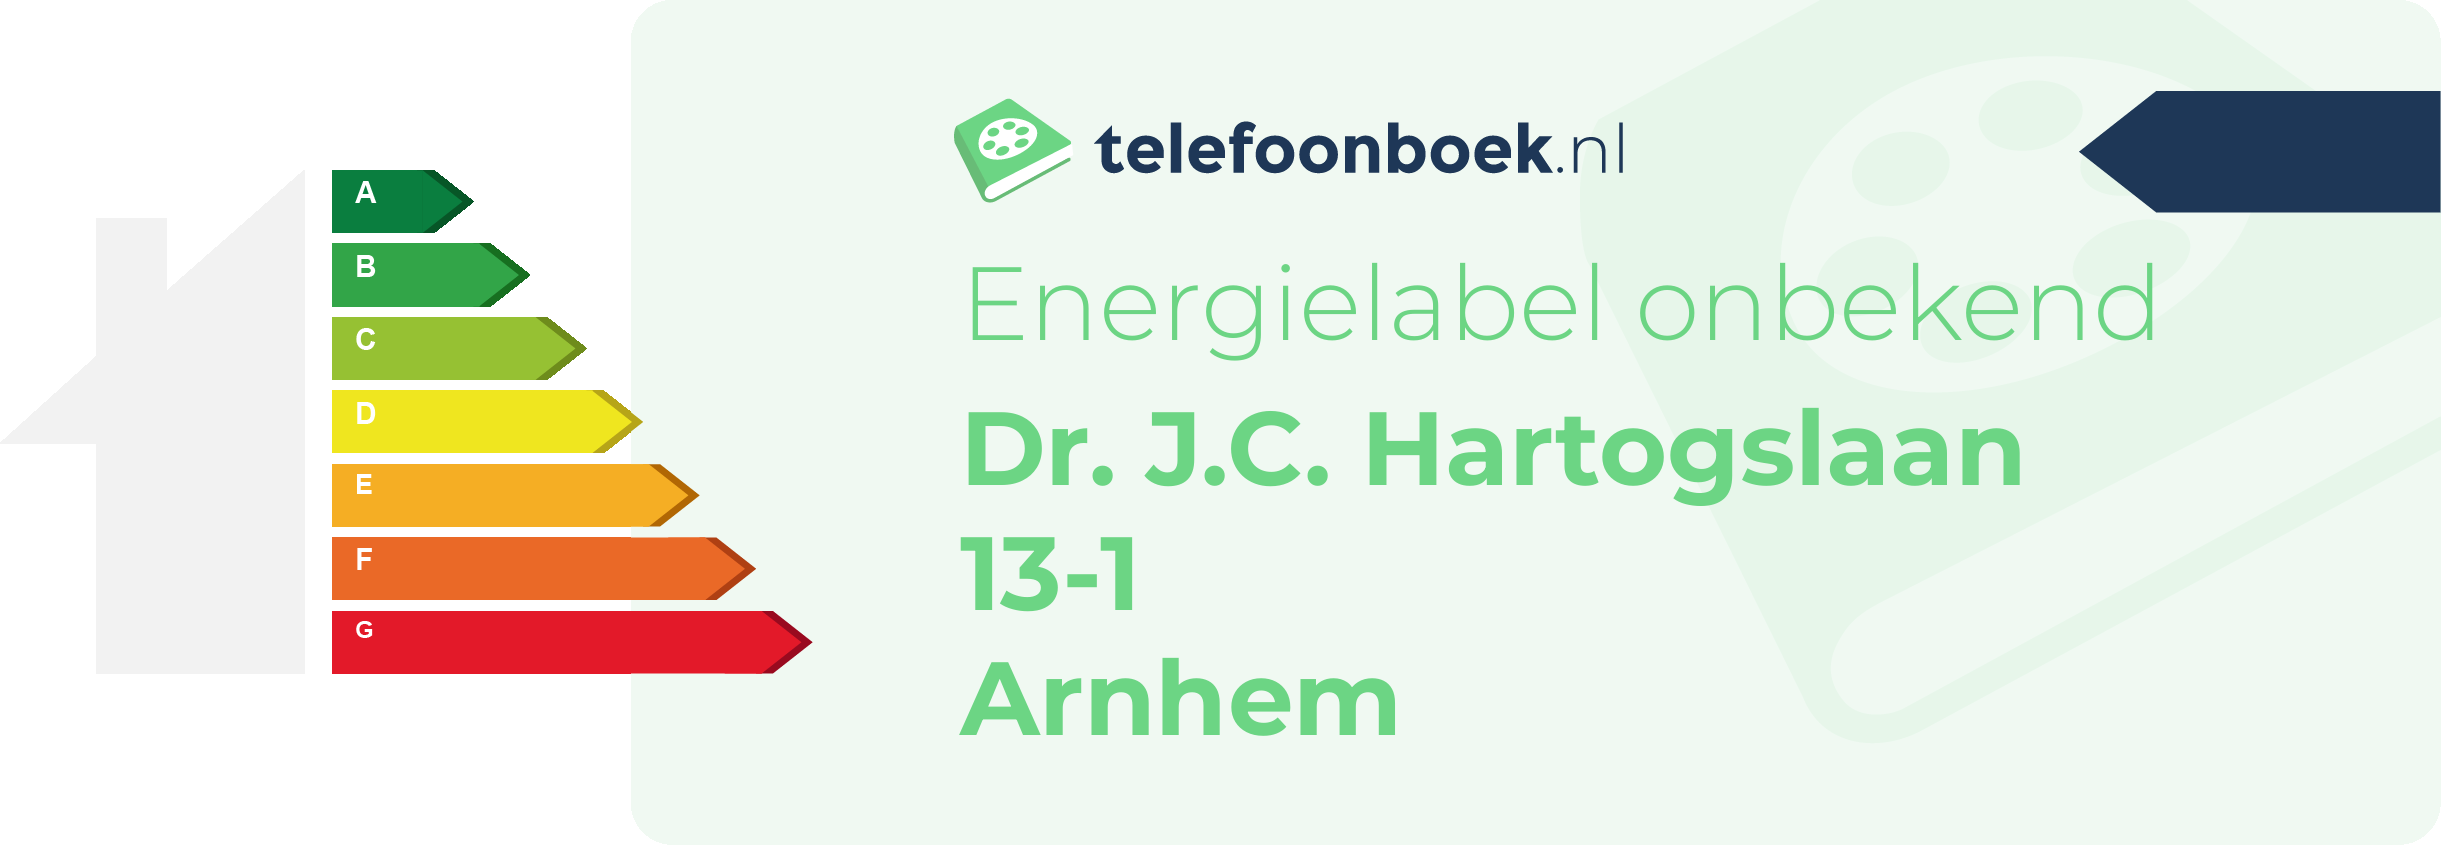 Energielabel Dr. J.C. Hartogslaan 13-1 Arnhem